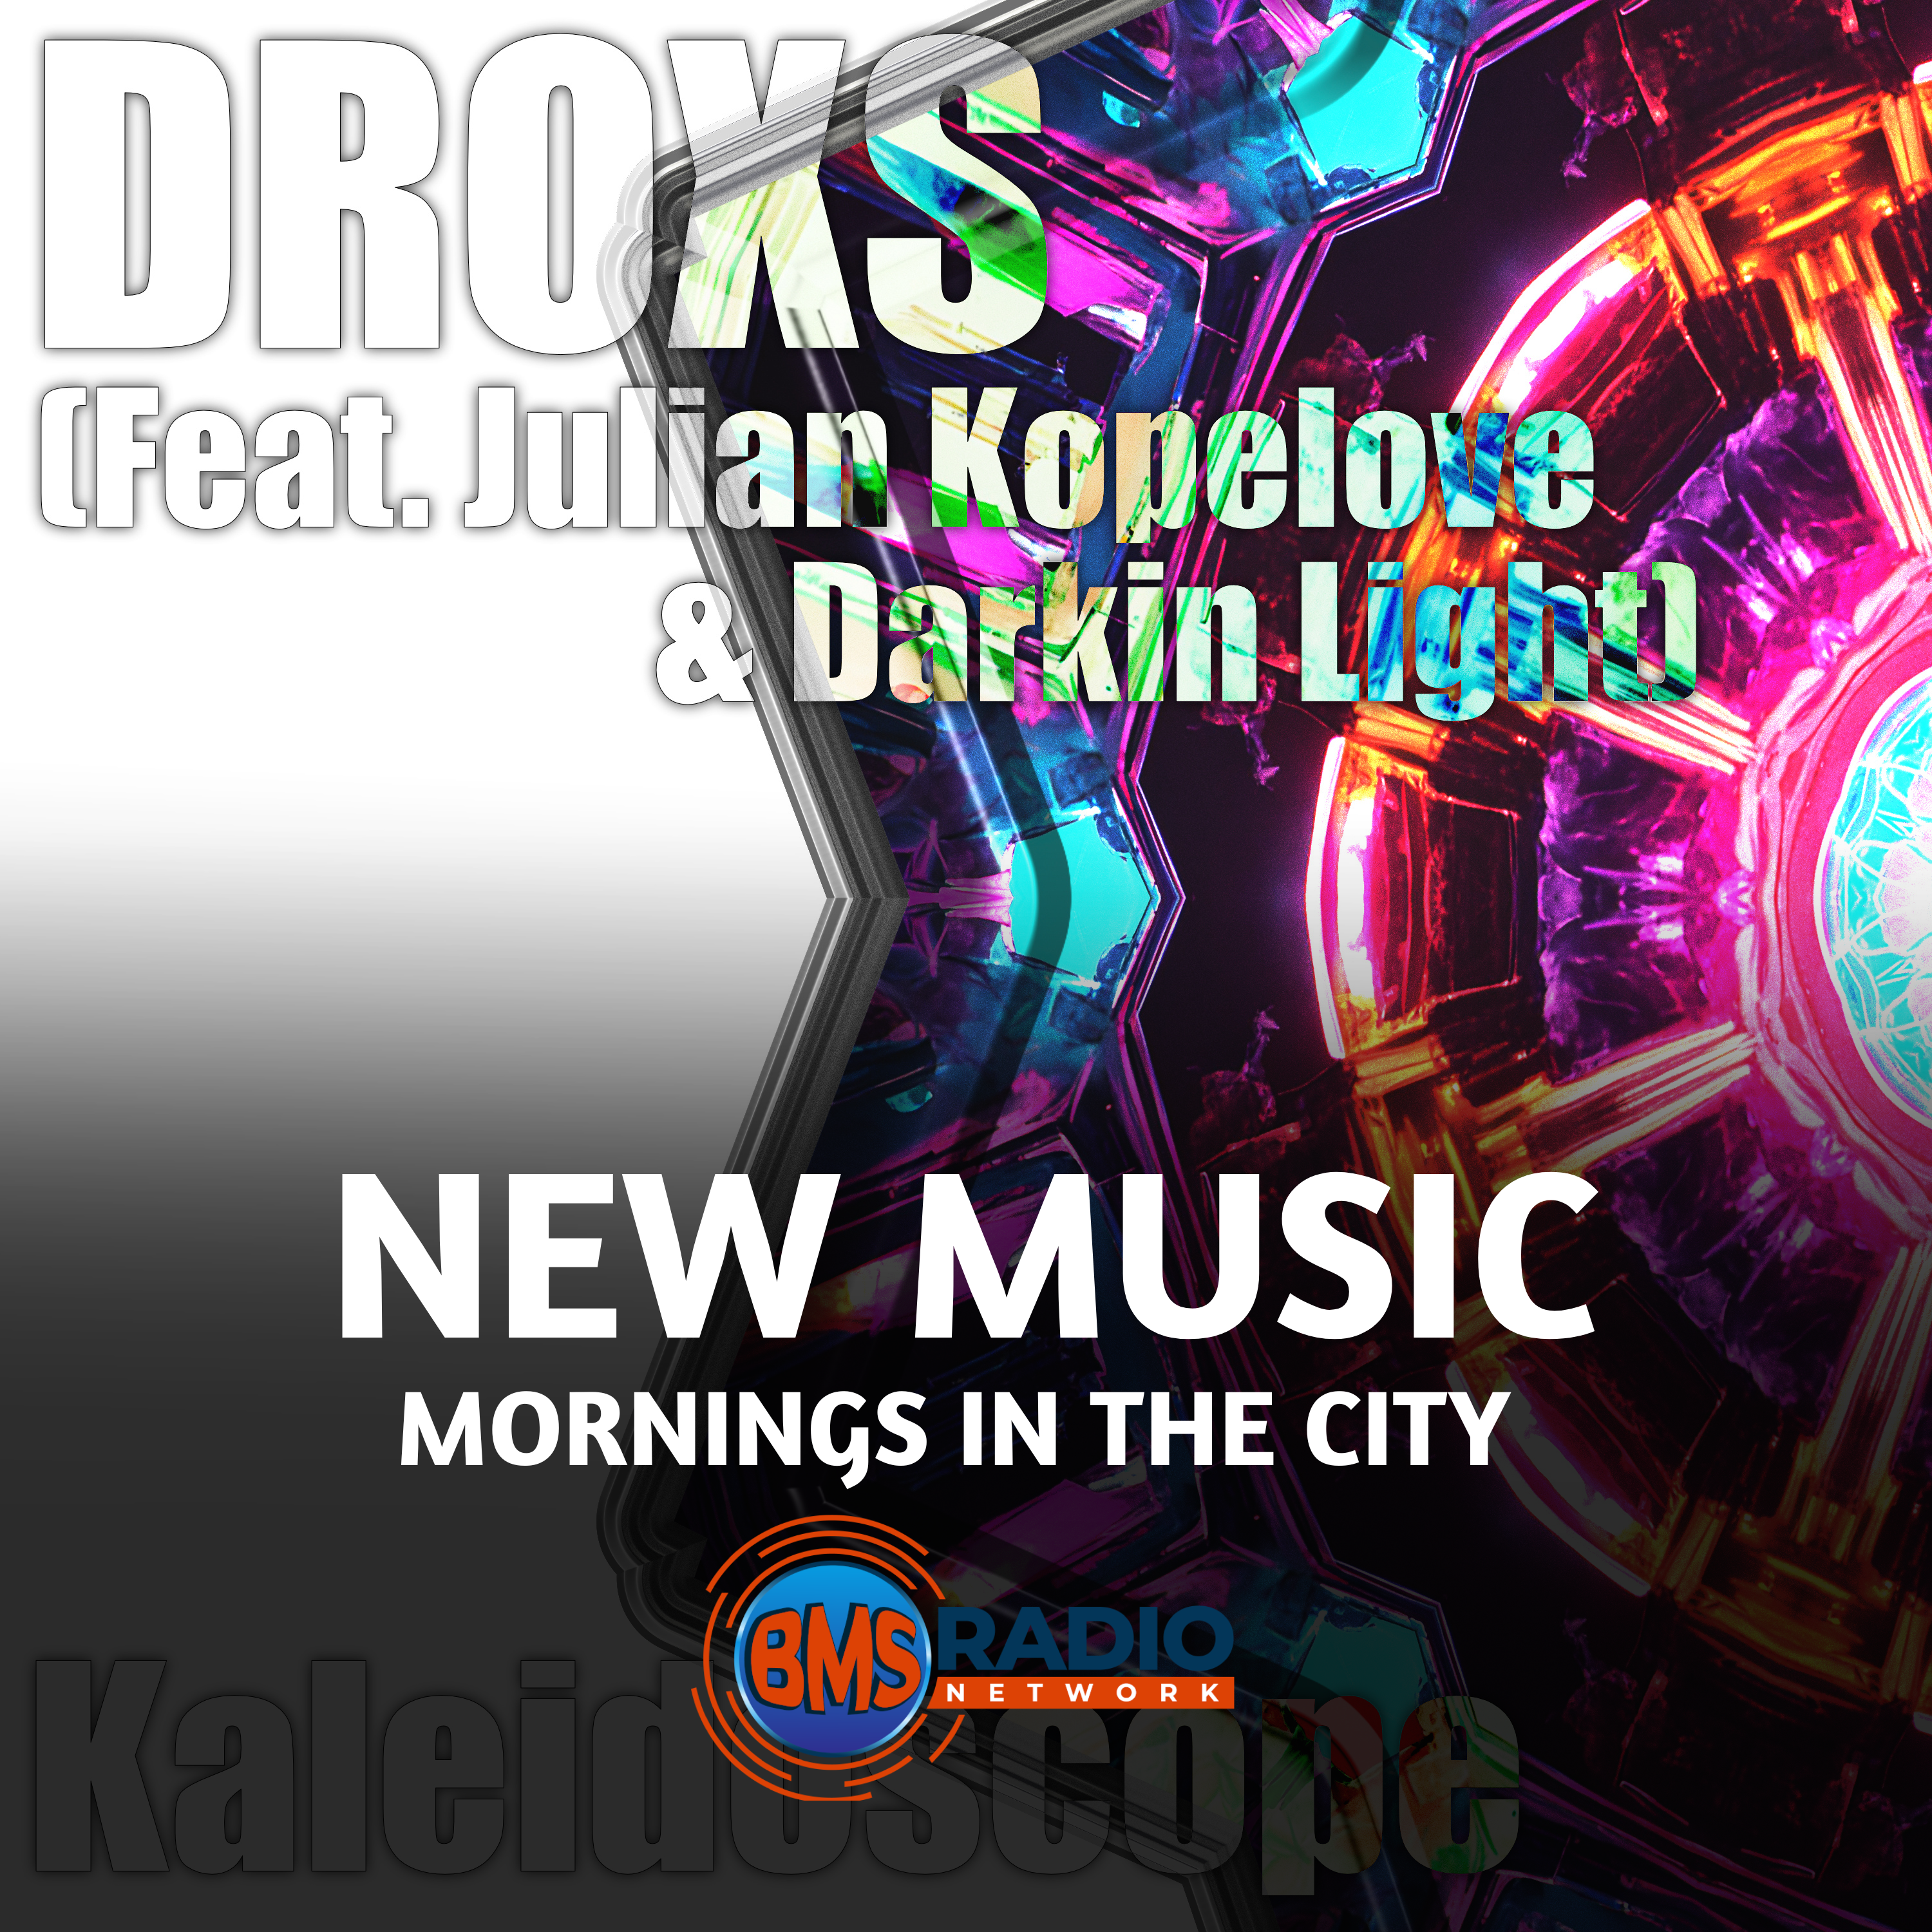 "Kaleidoscope" featuring Julian Kopelove & Darkin Light by Droxs